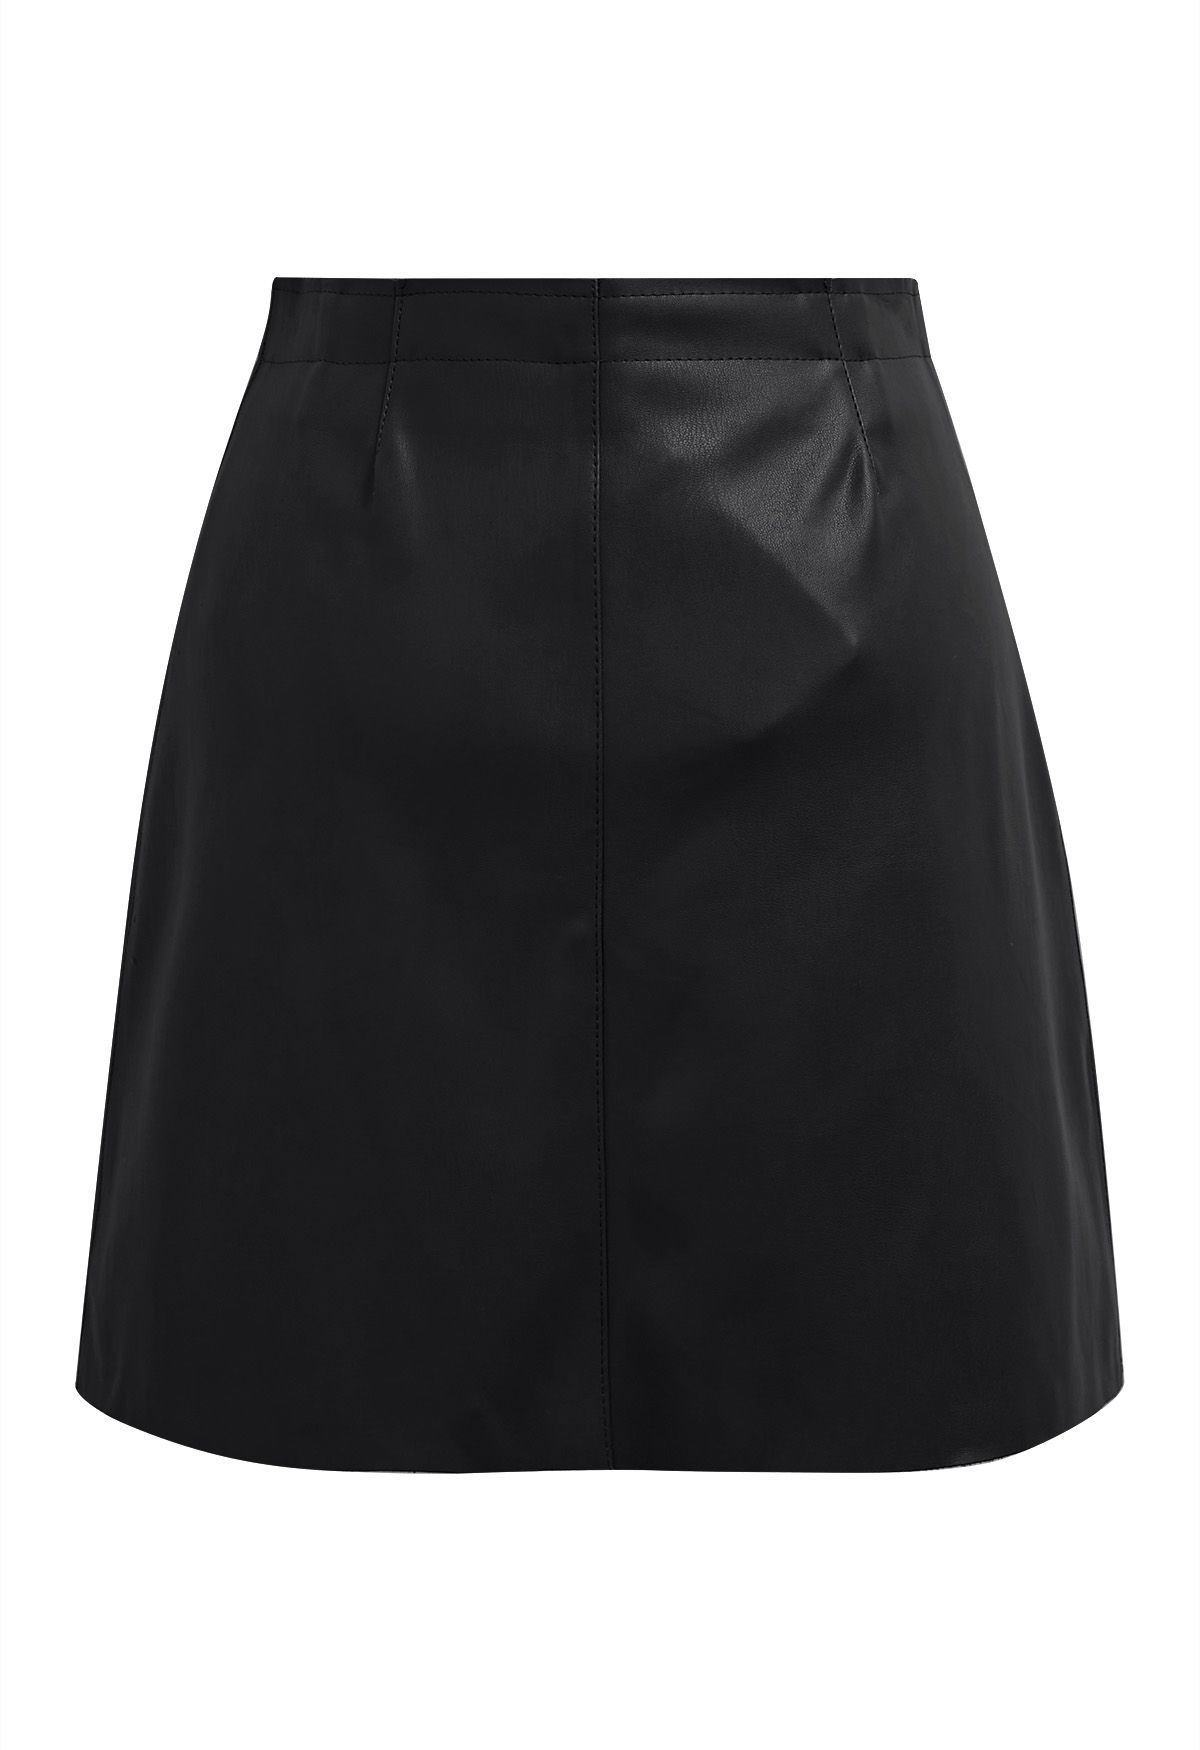 Zipper Faux Leather Mini Skirt in Black - Retro, Indie and Unique Fashion